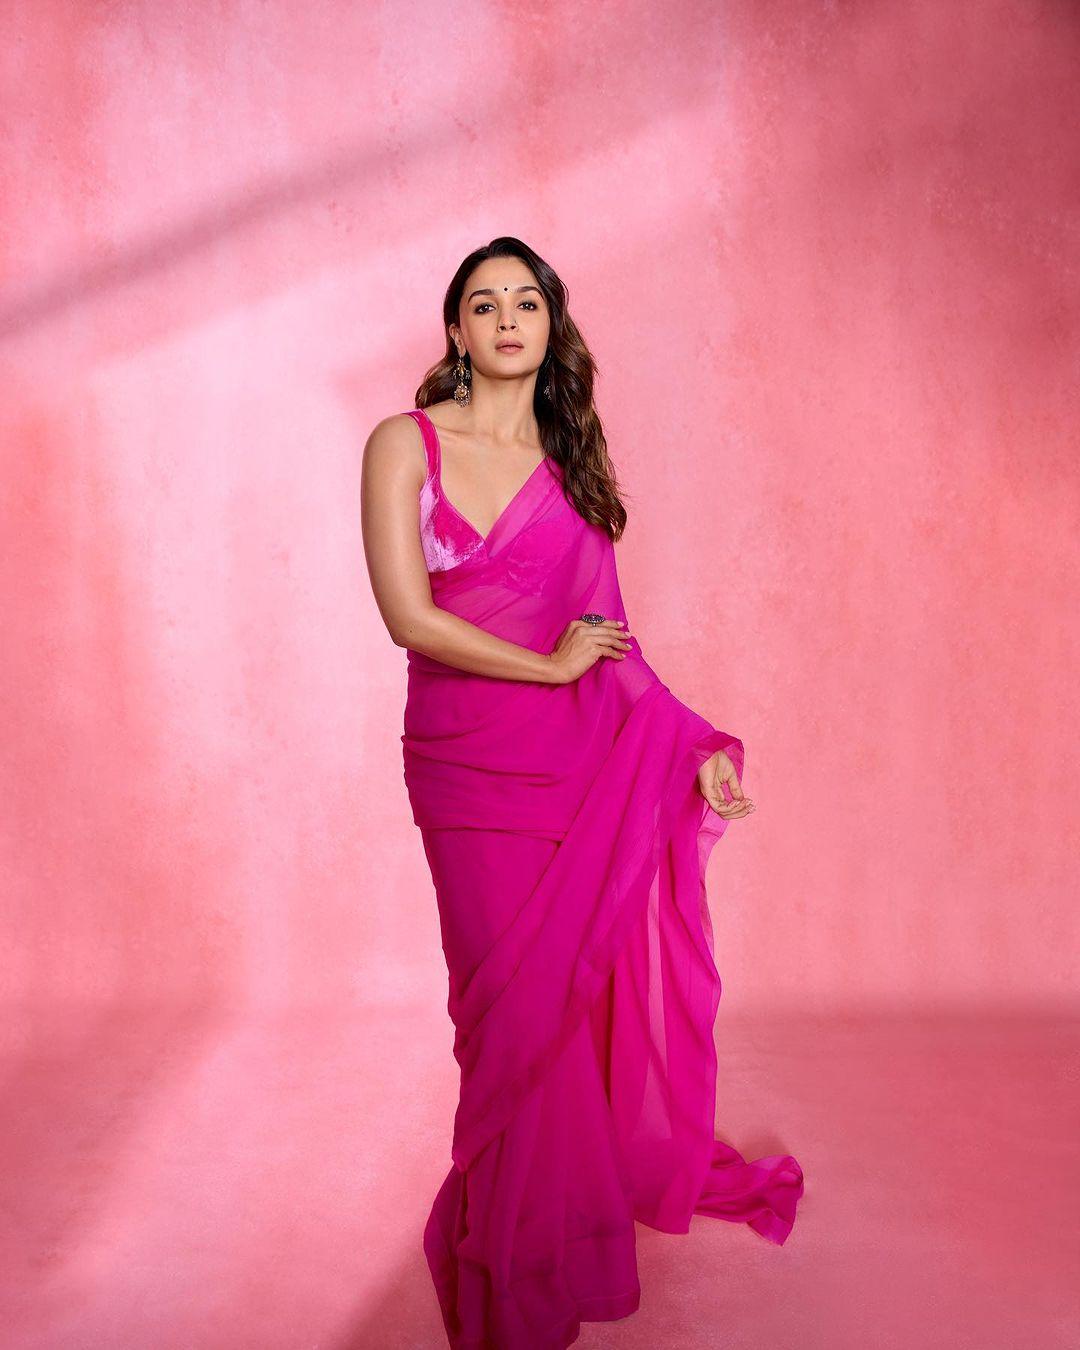 Alia Bhatt embodied 'Barbiecore' in this pink chiffon saree